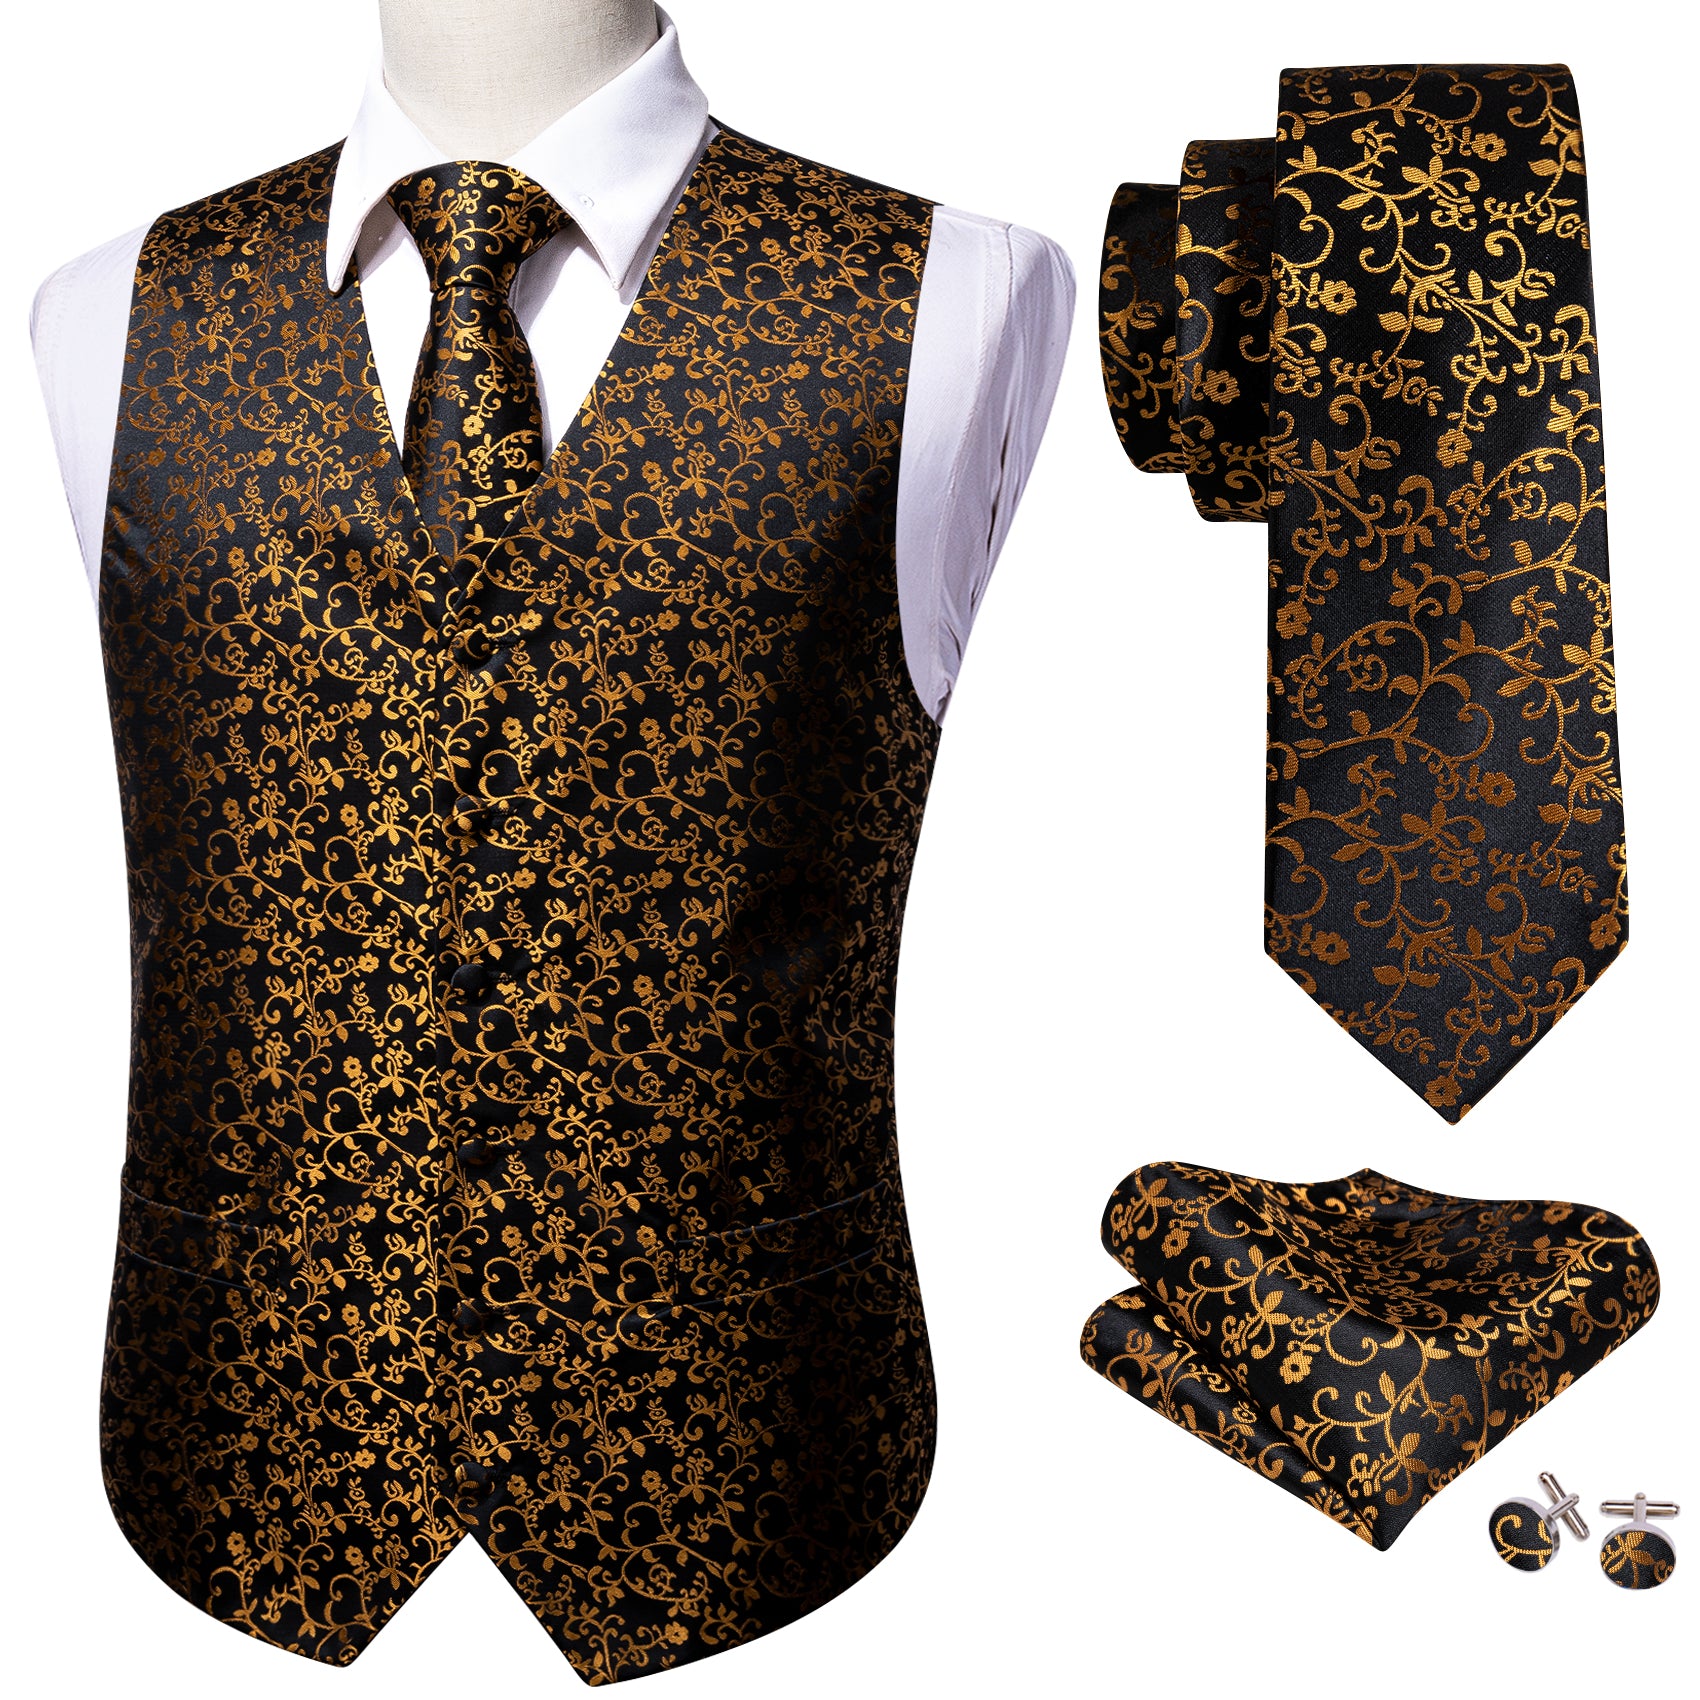 New Black Gold Floral Silk Vest Necktie Pocket Square Cufflinks Set